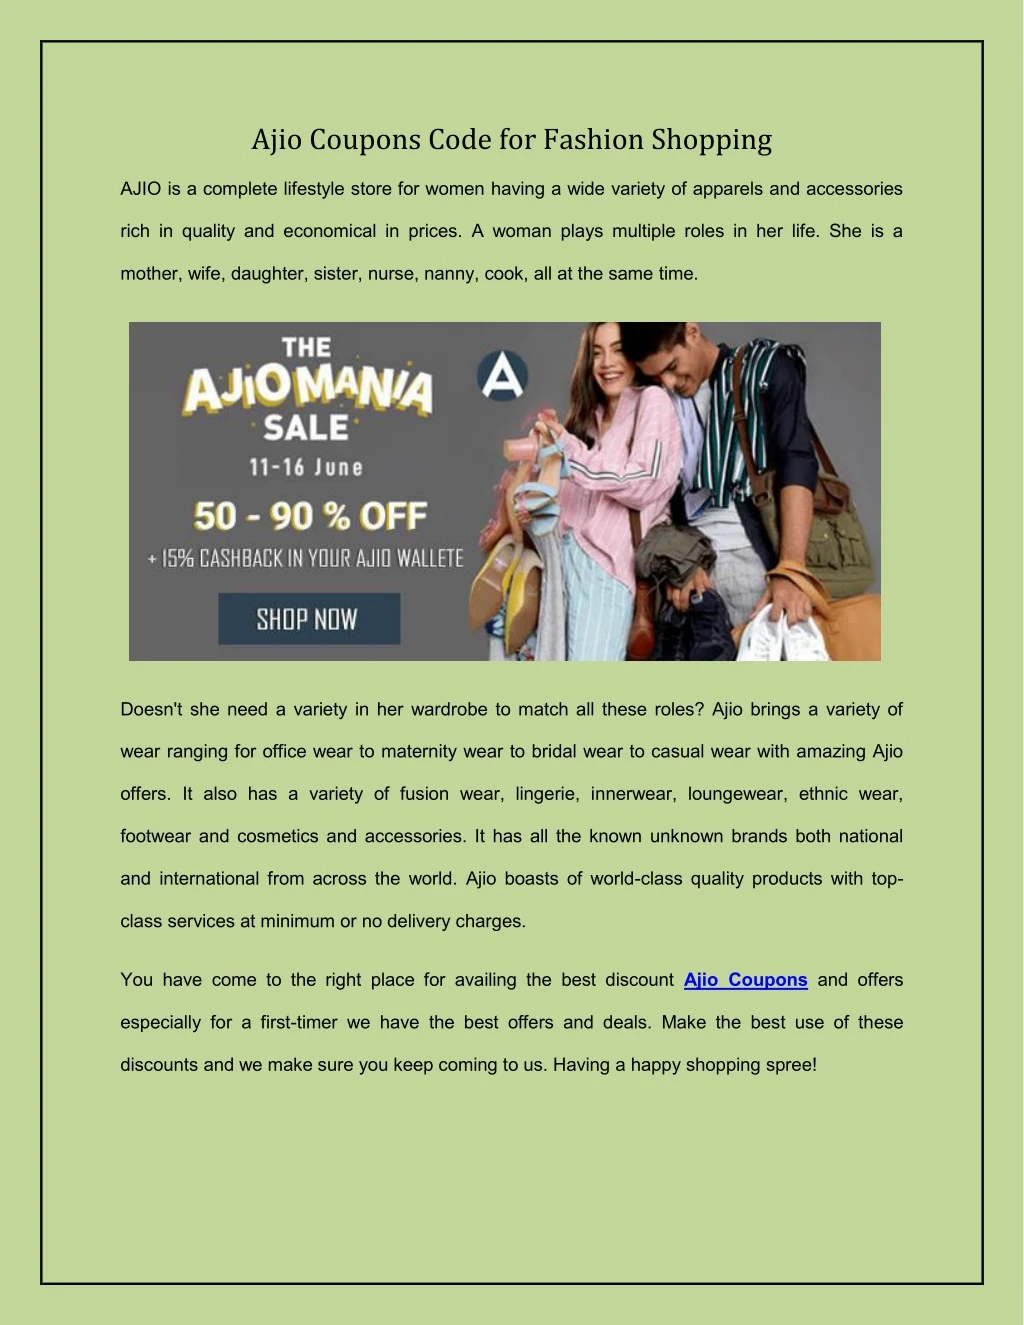 ajio coupons code for fashion shopping